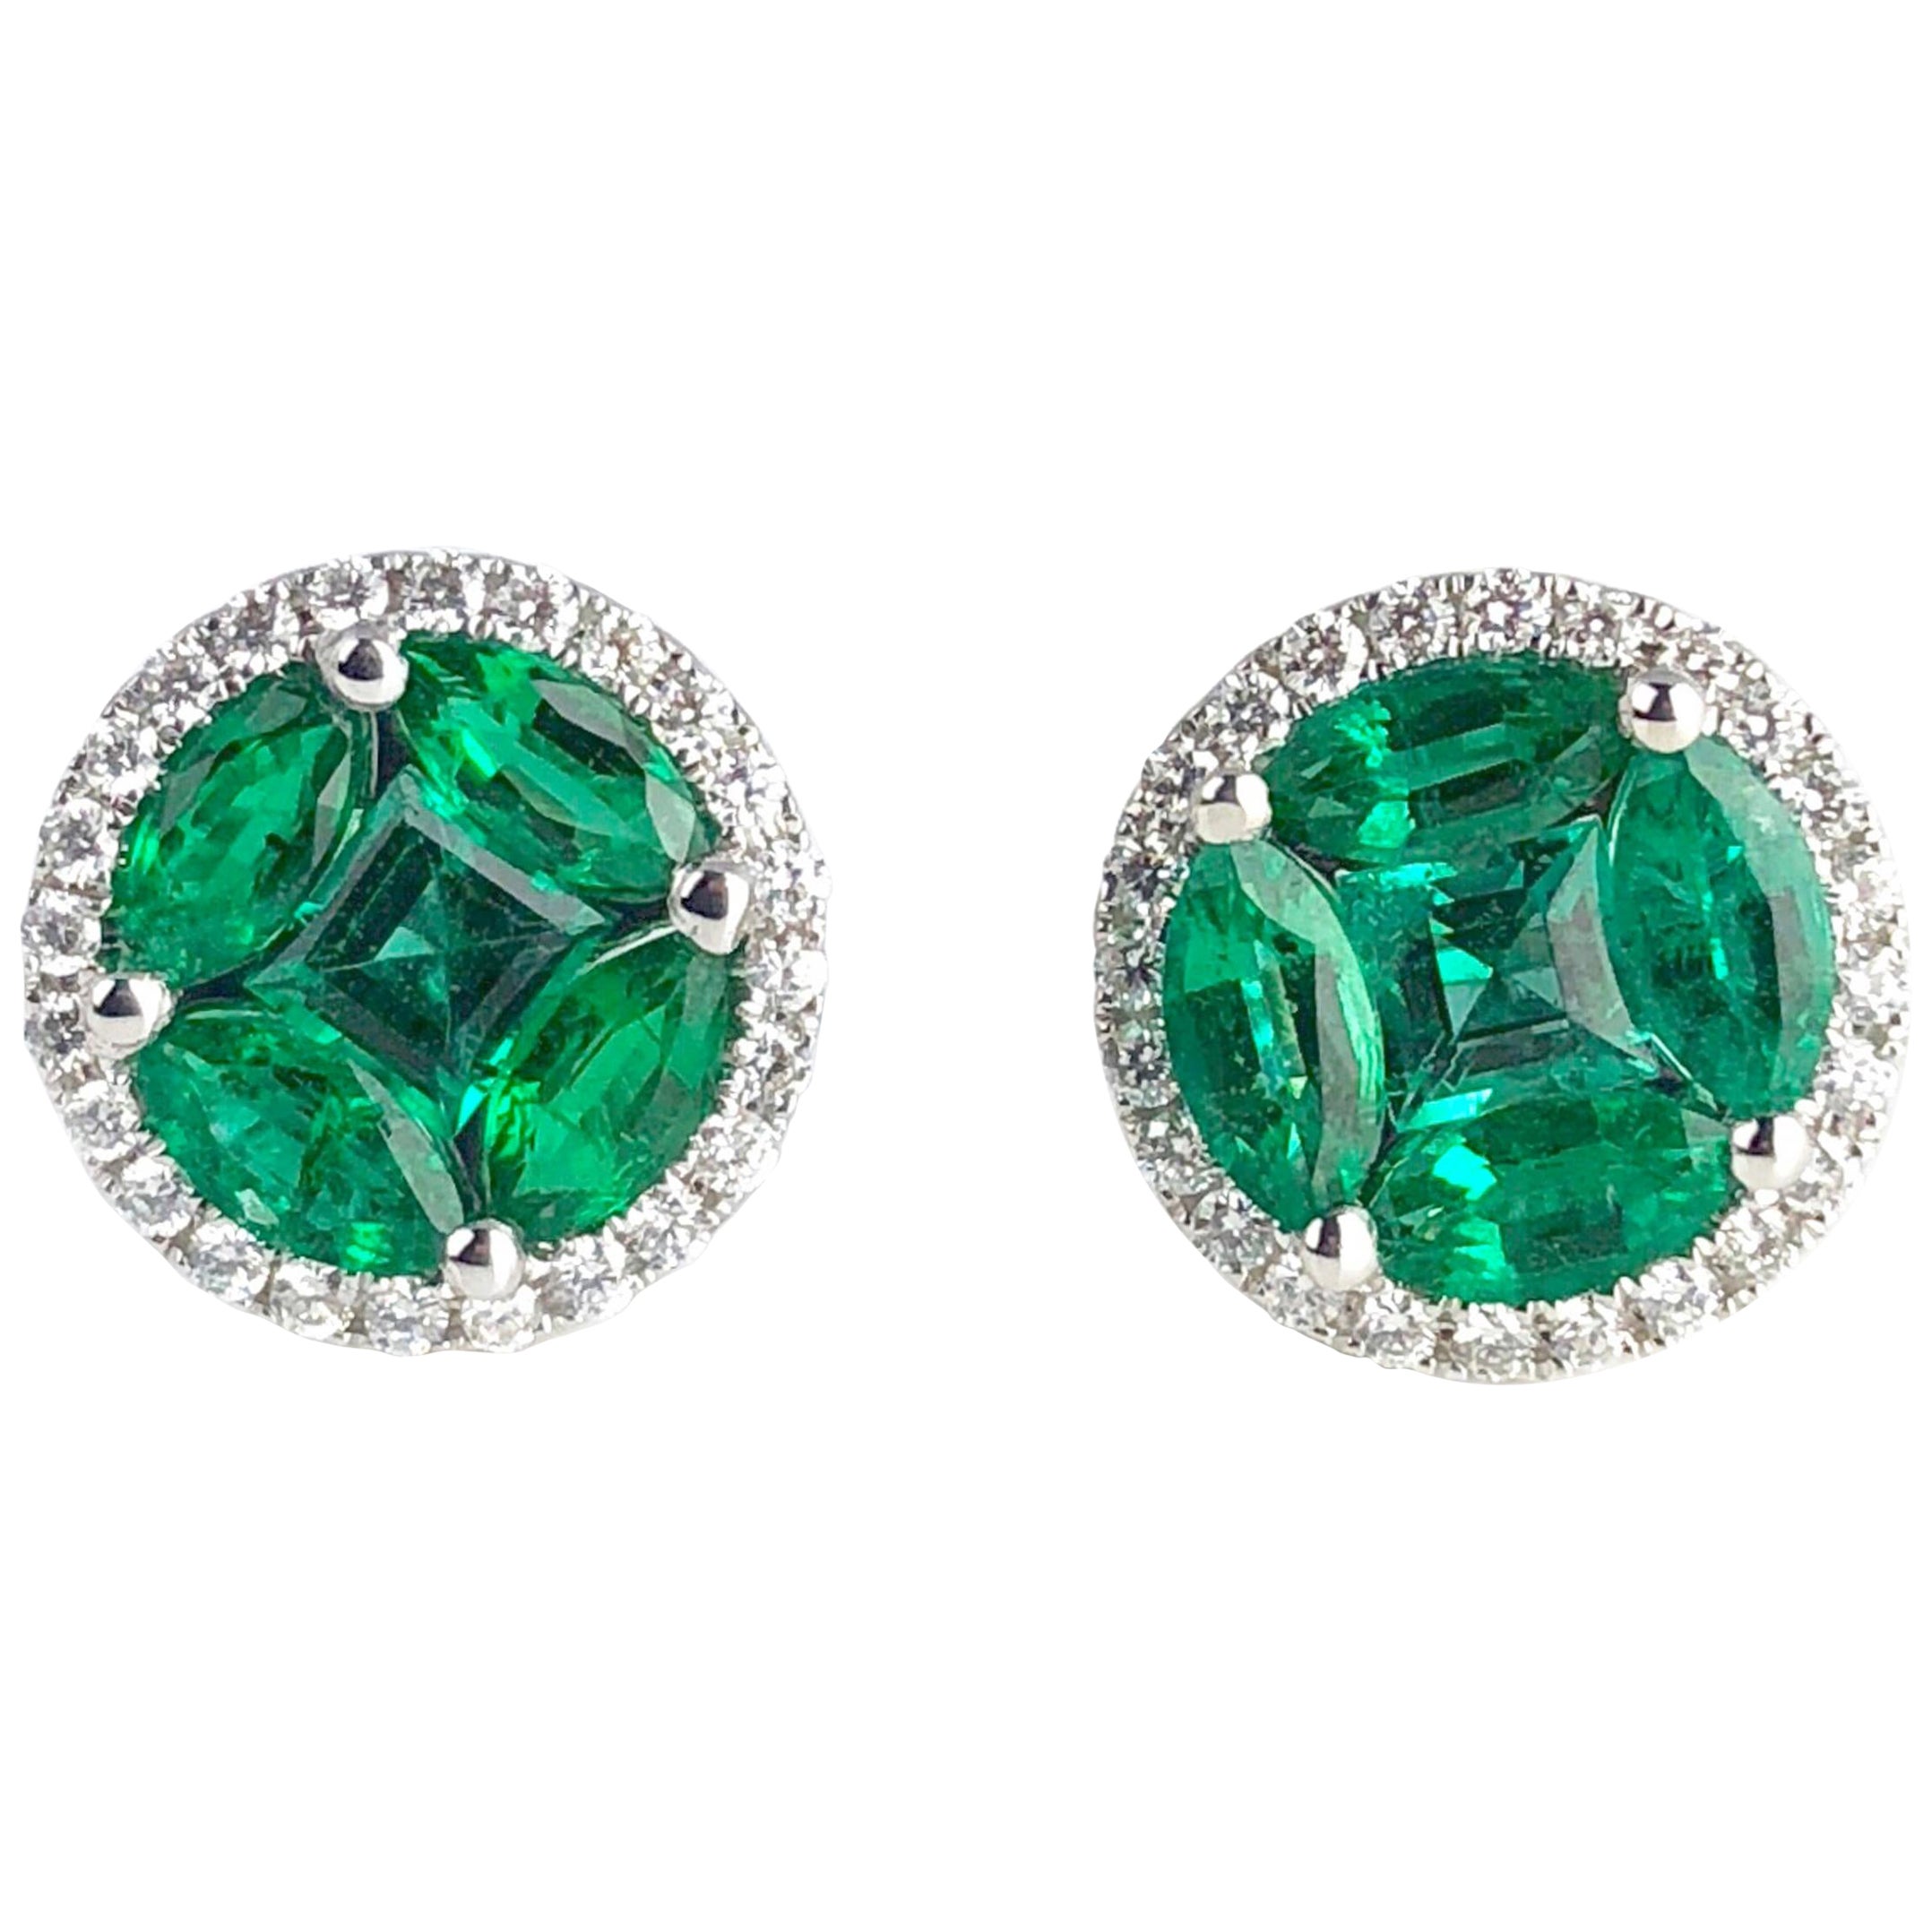 1.28 Carat Emerald and 0.22 Carat Diamond Stud Earrings in 18 Karat White Gold